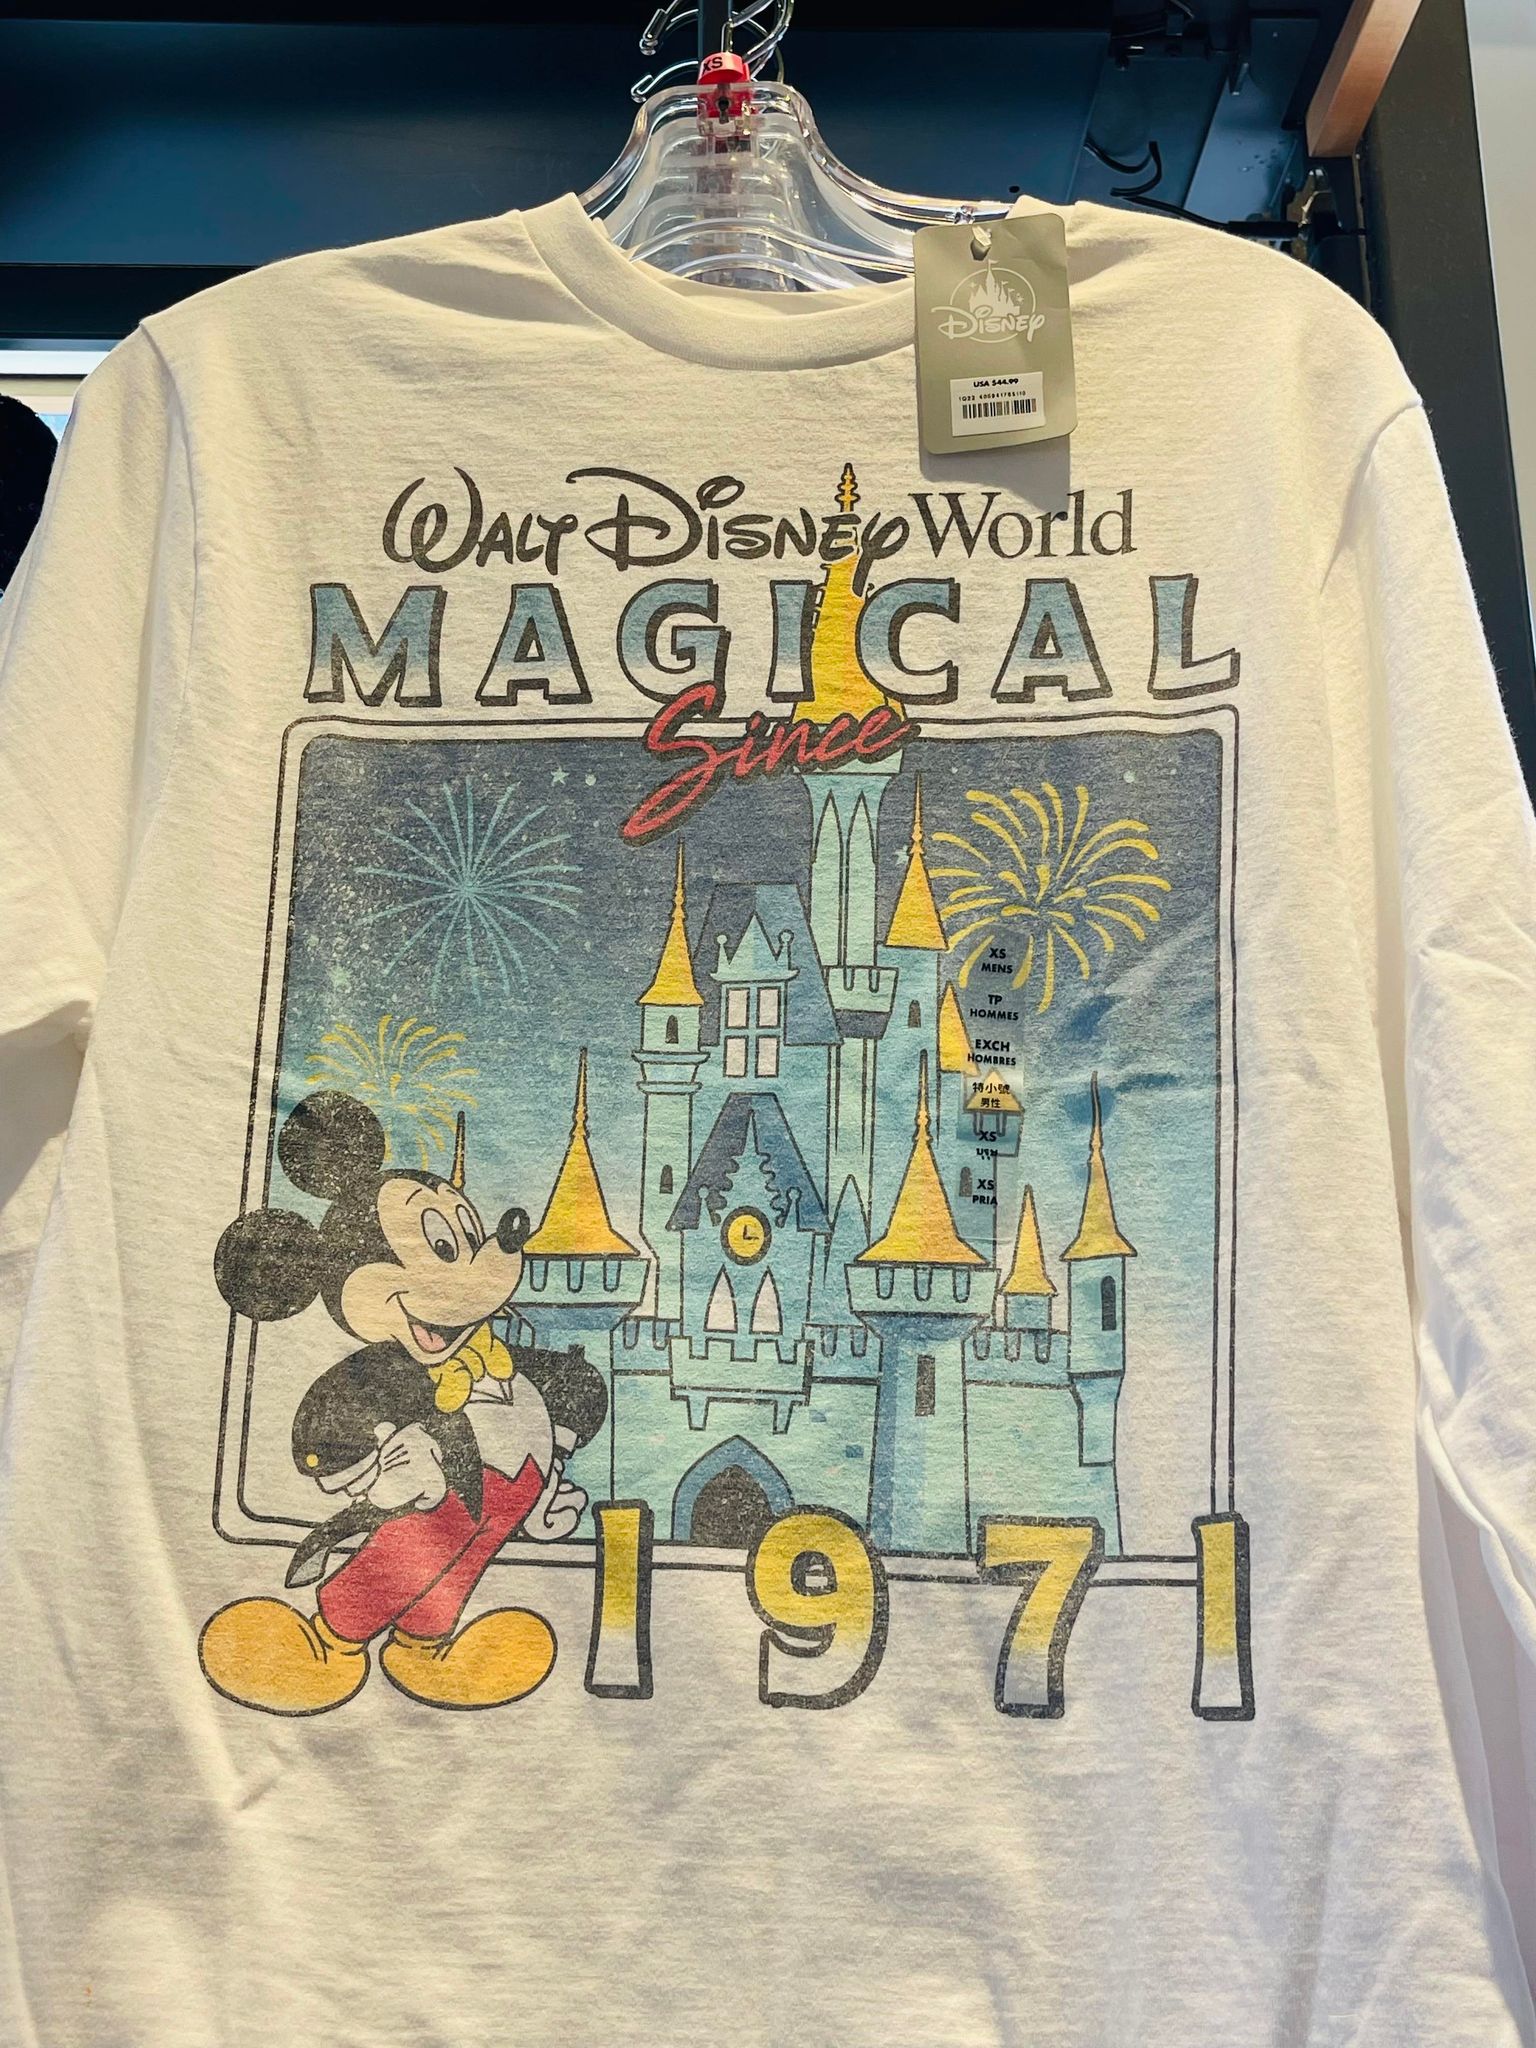 New Long-Sleeved Walt Disney World Shirt Brings Vintage Style to Disney ...